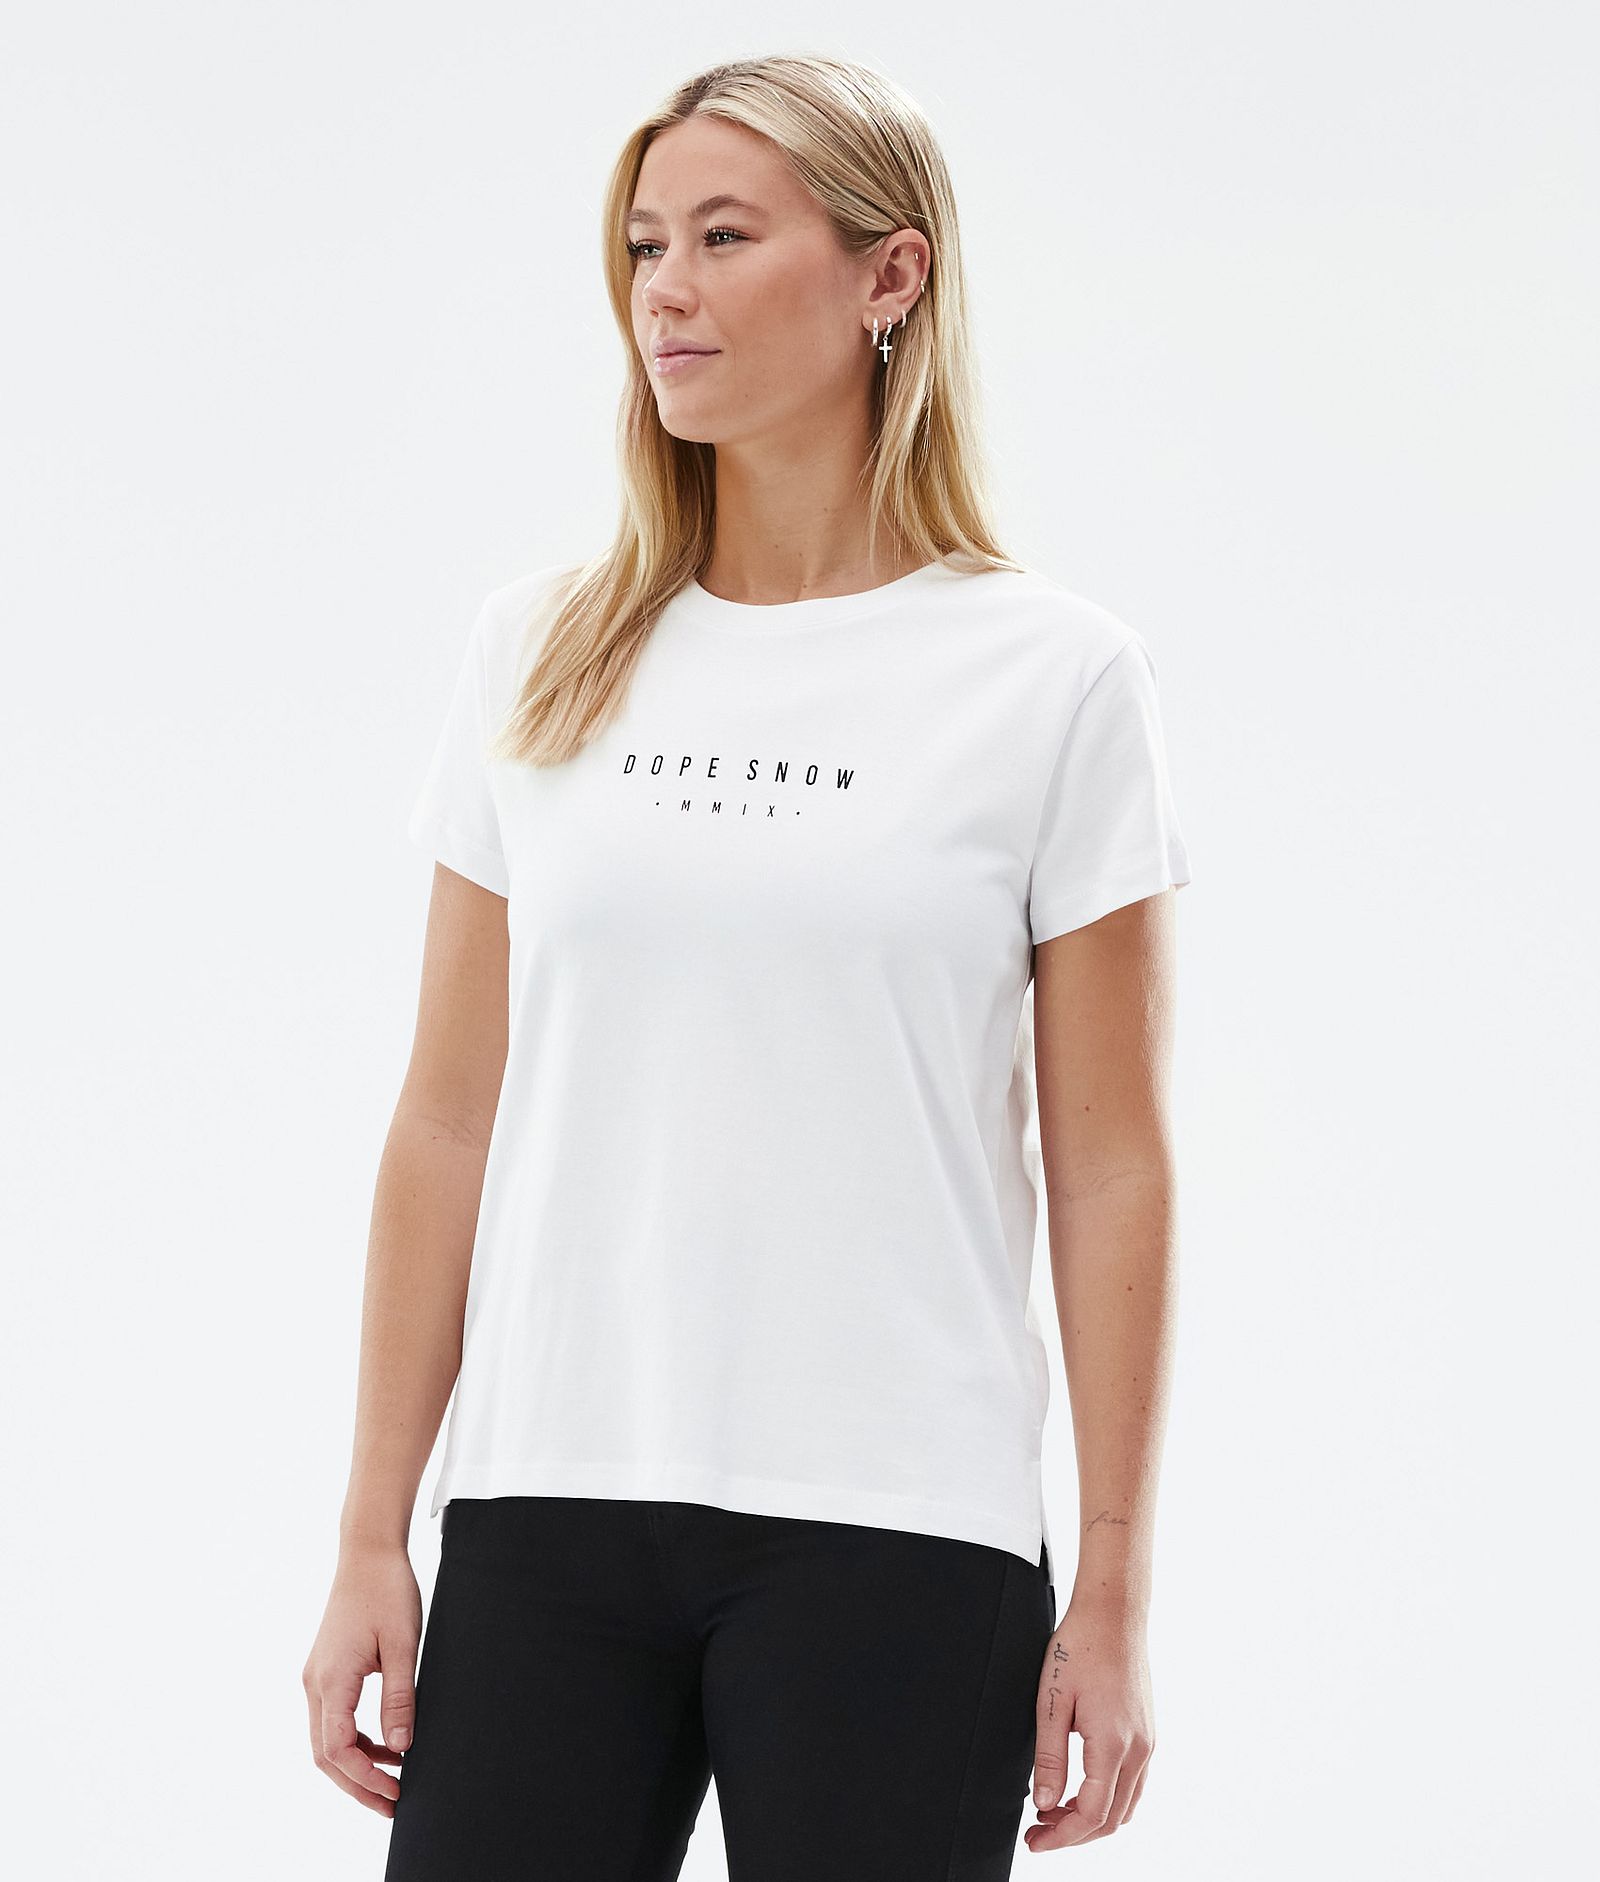 Standard W T-shirt Women Silhouette White